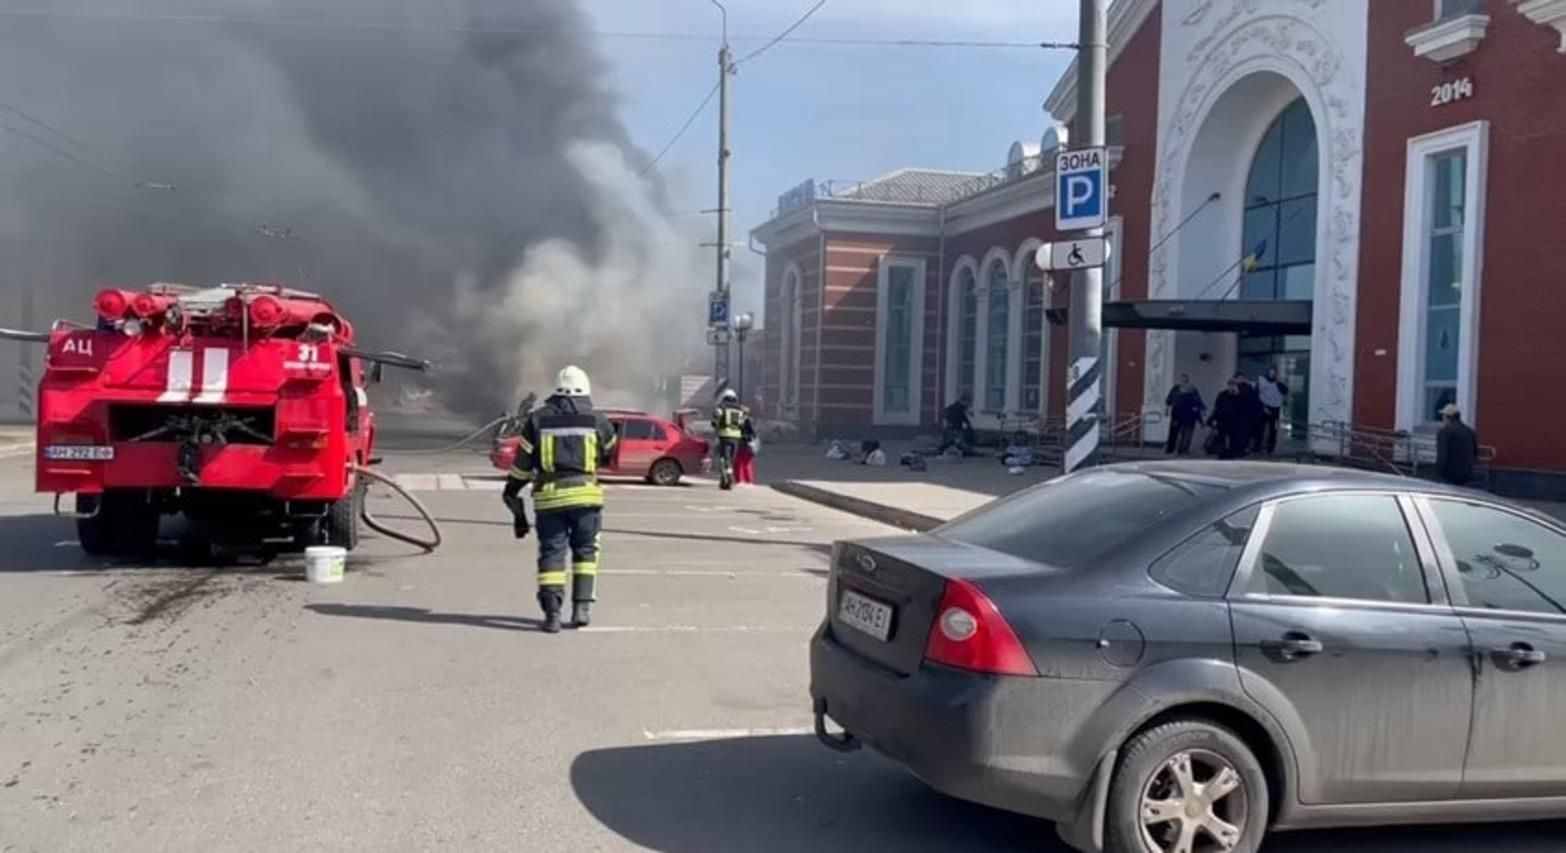 Удар по вокзалу в Краматорске - воспоминания спасателя об атаке 8 апреля 2022 - 24 Канал